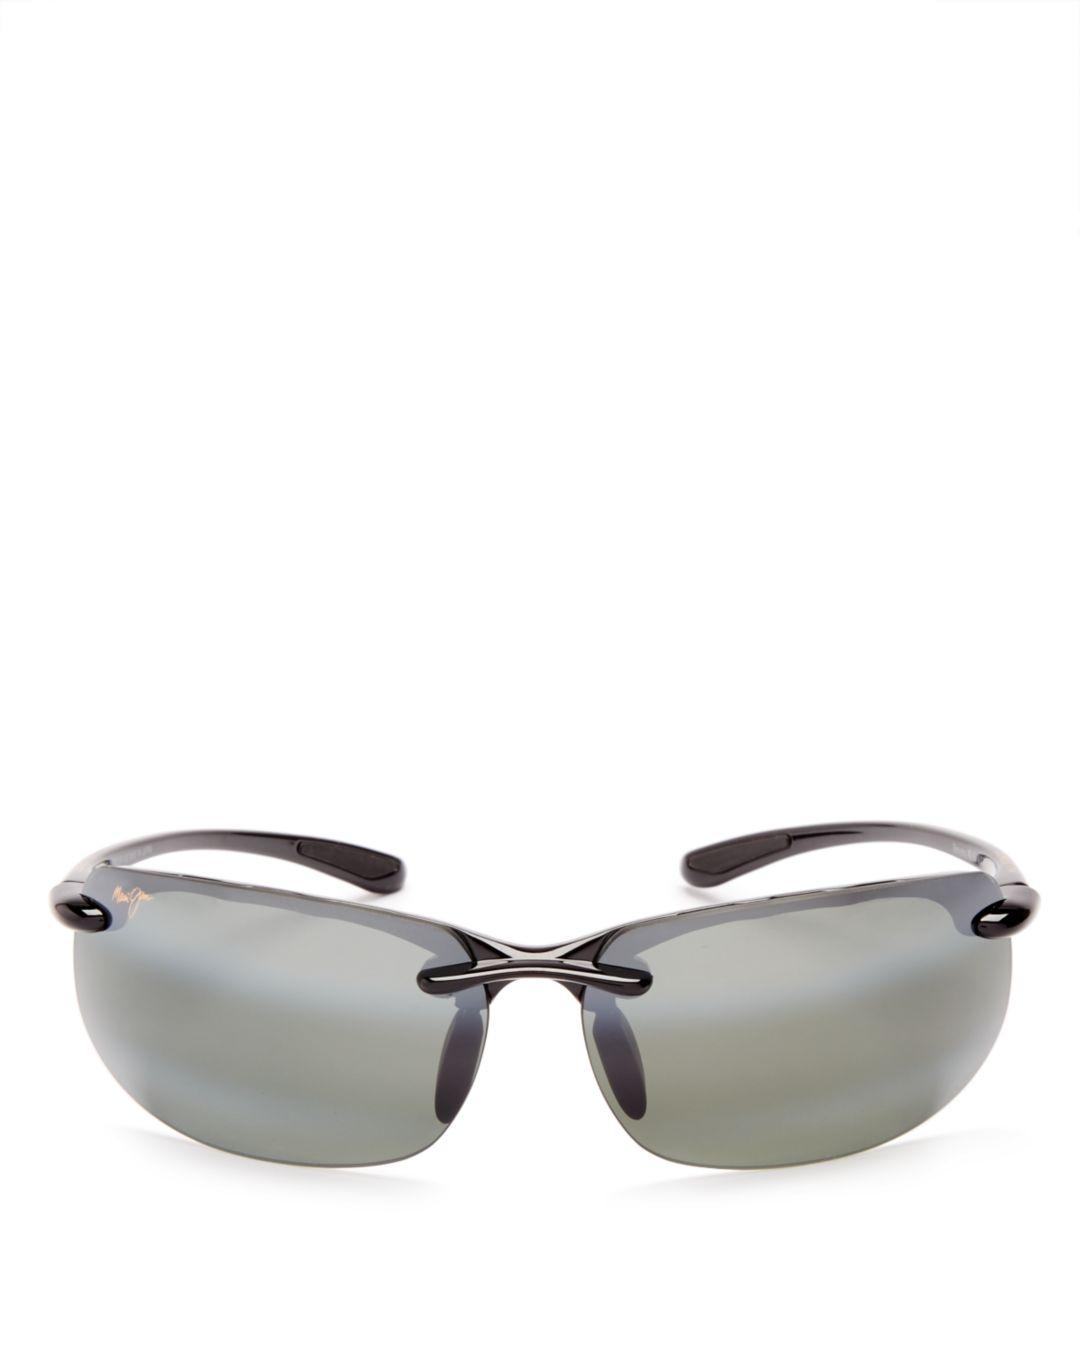 Maui Jim Banyans Polarized Rimless Wraparound Sunglasses in Black/Gray  (Gray) for Men - Lyst